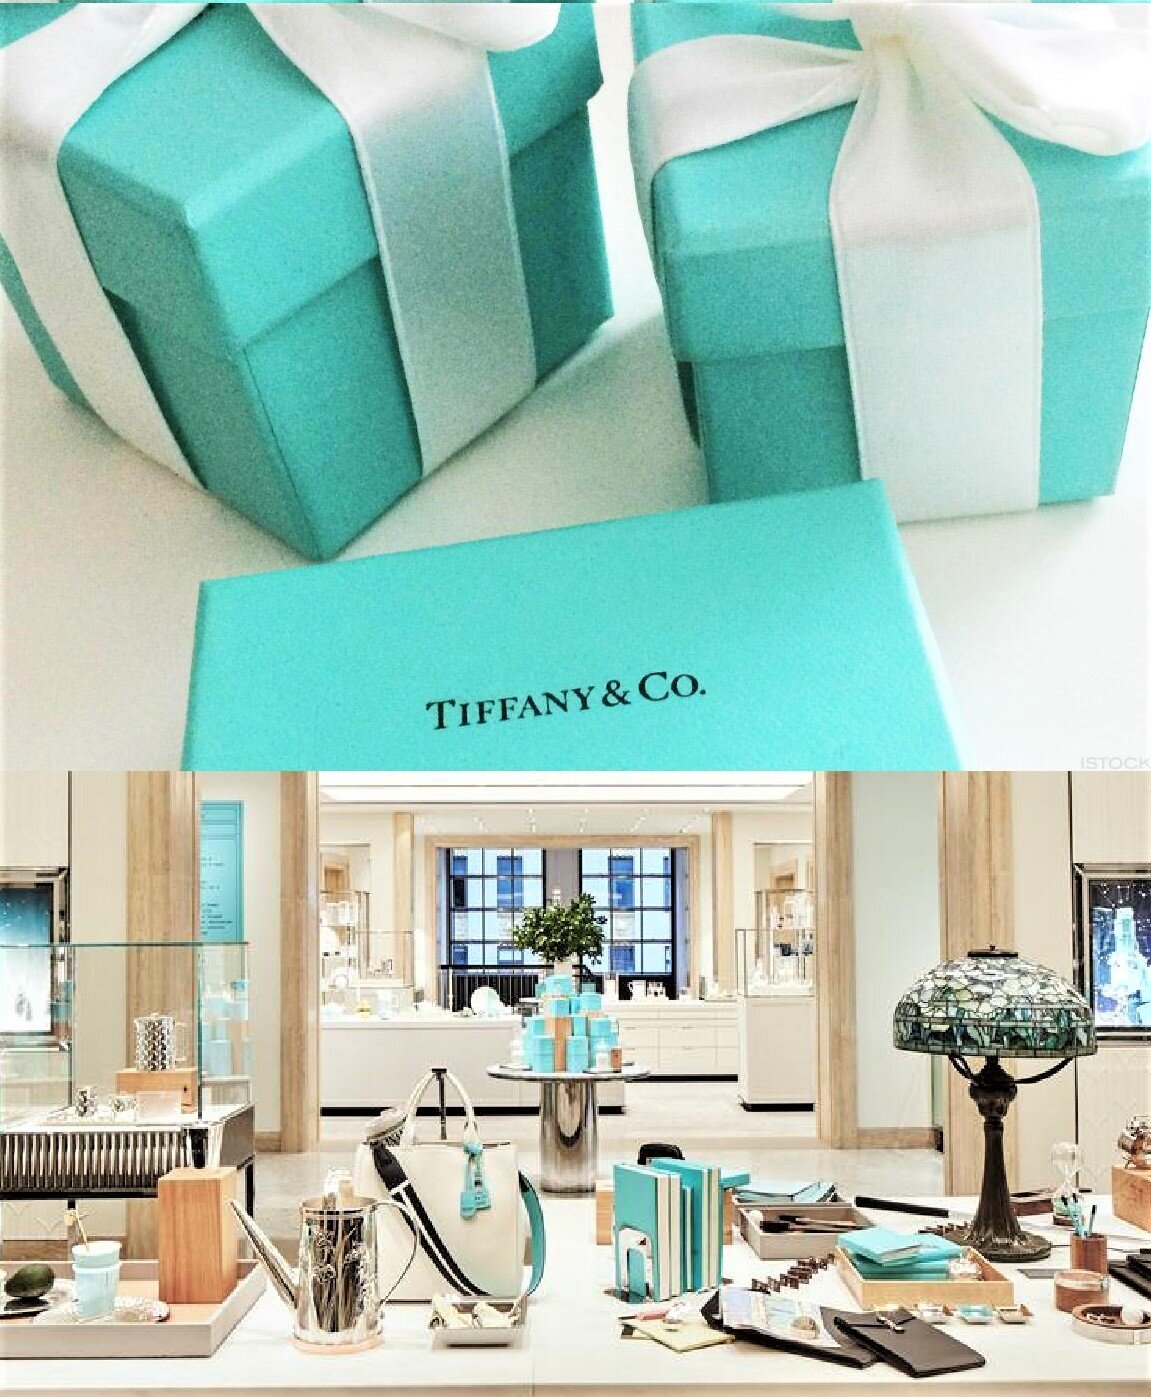 Luxury player: why Bernard Arnault is making a blockbuster bid for  Tiffany's, Bernard Arnault